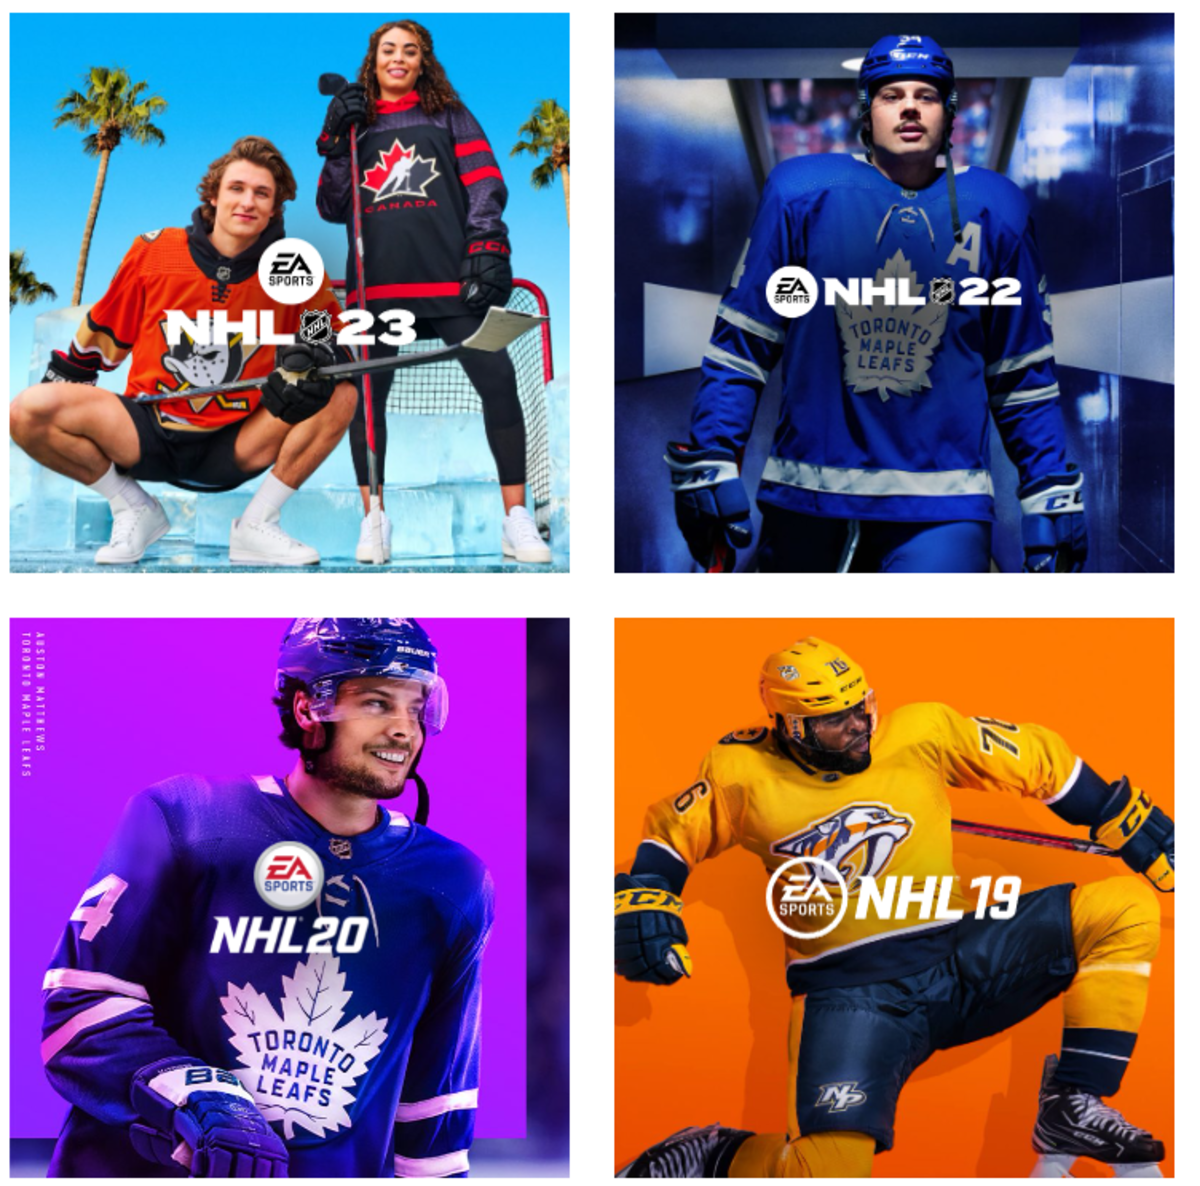 5 Reasons to Buy NHL 23